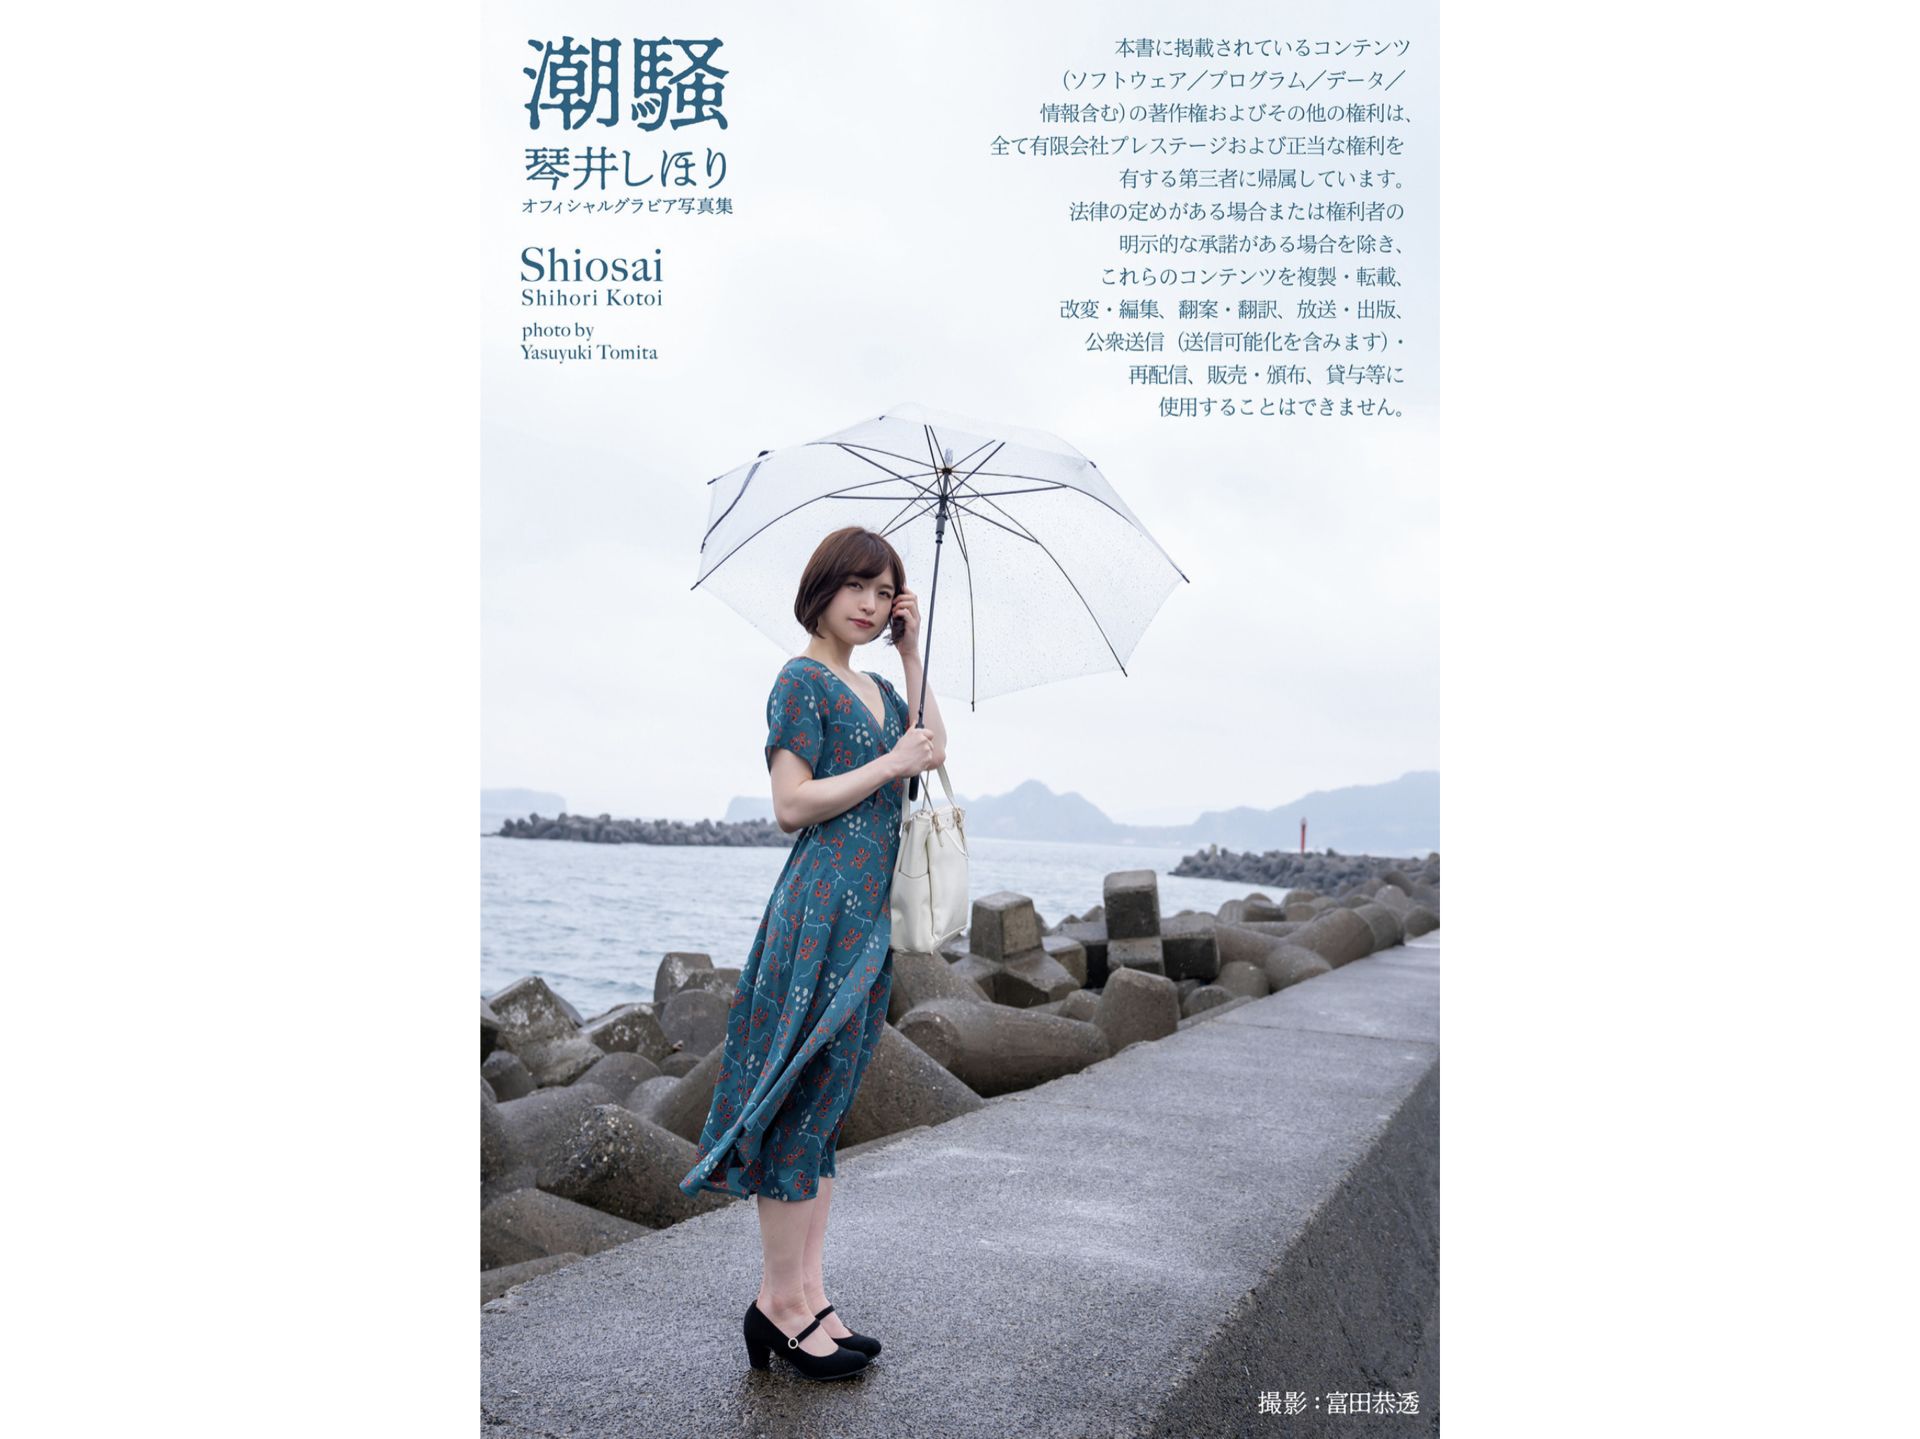 Shihori Kotoi 琴井しほり - Shiosai 潮騒/(34P)